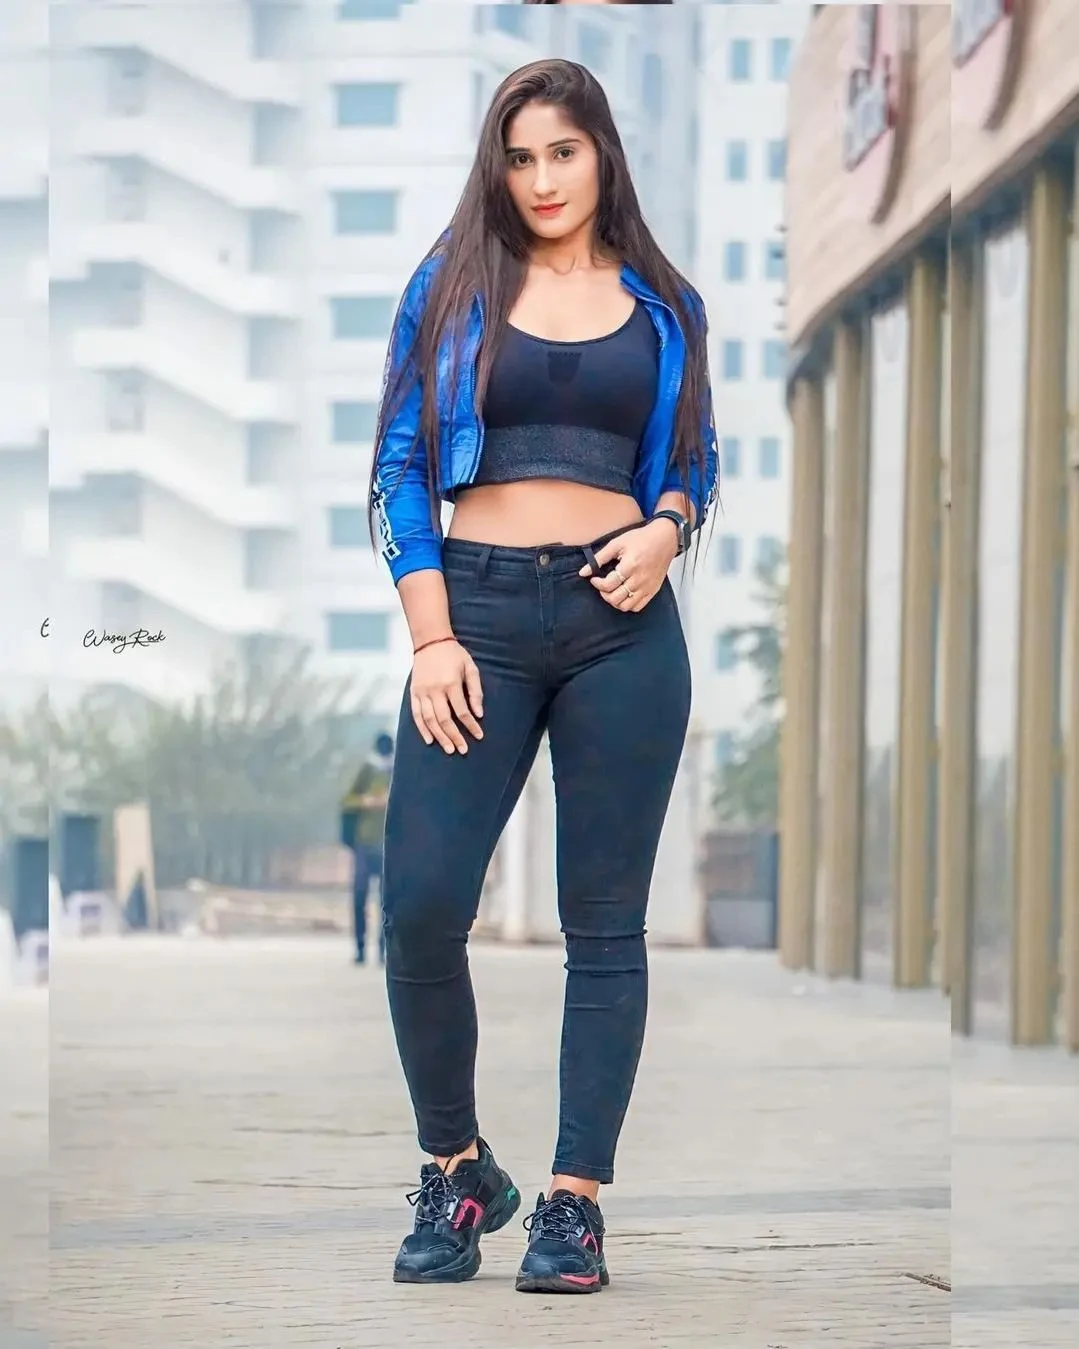 Priyanka Drall hot and sexy Thighs and Butt | Fitness Model Priyanka Drall hot Gym Workout